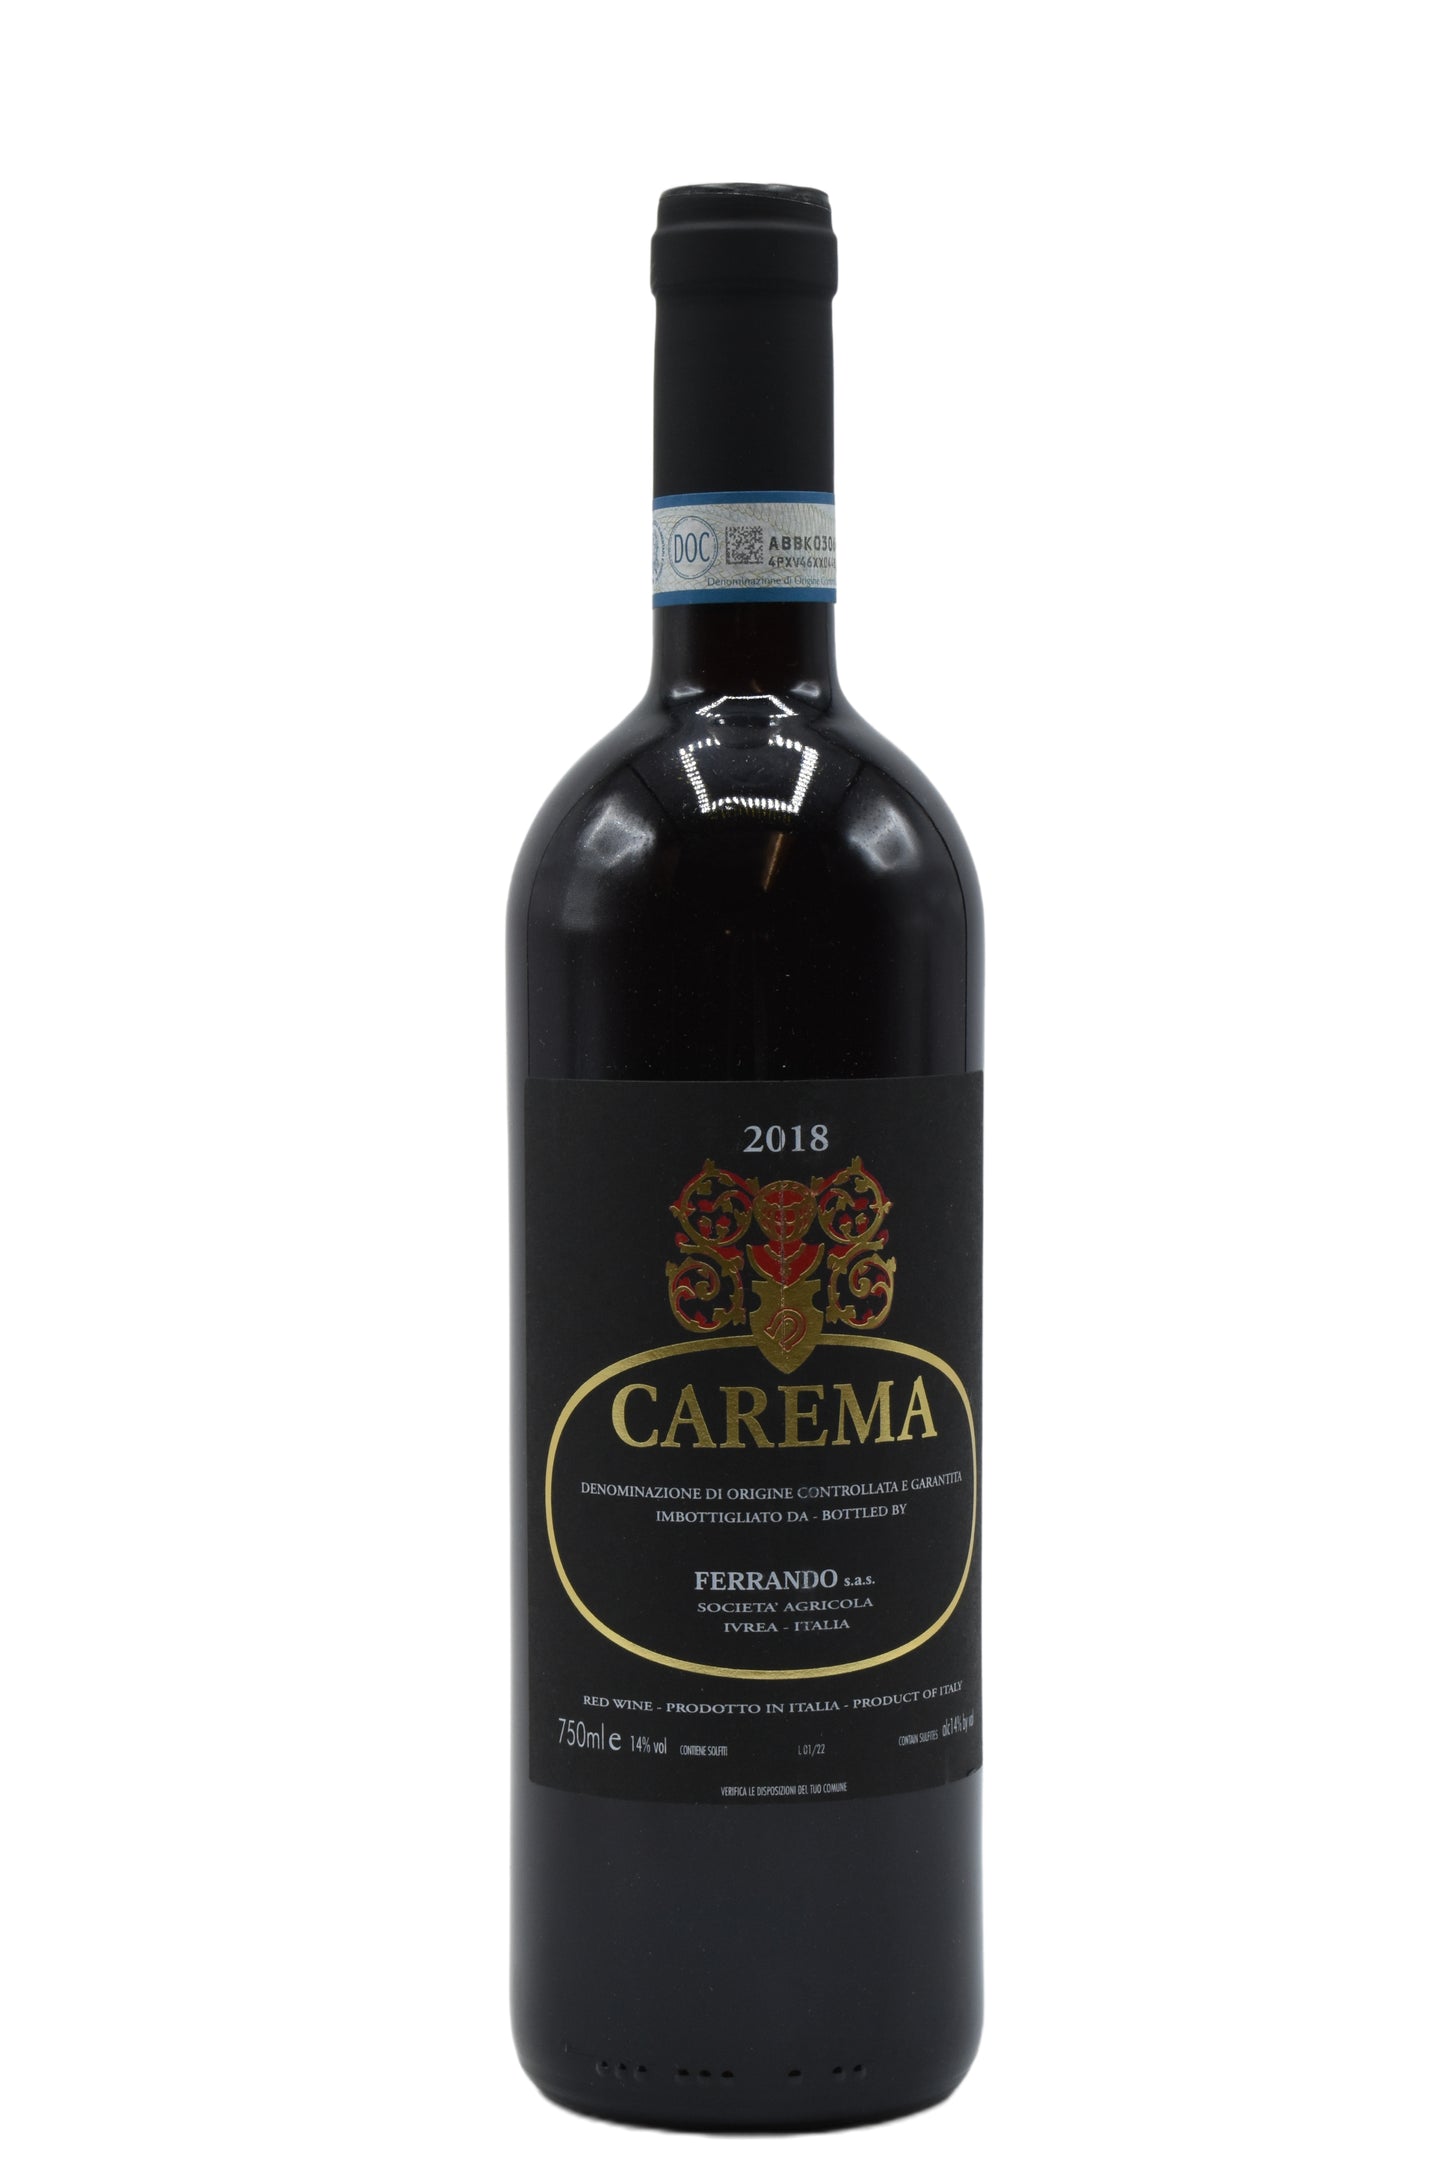 2018 Luigi Ferrando, Carema Black Label Riserva (Etichetta Nera) 750ml - Walker Wine Co.